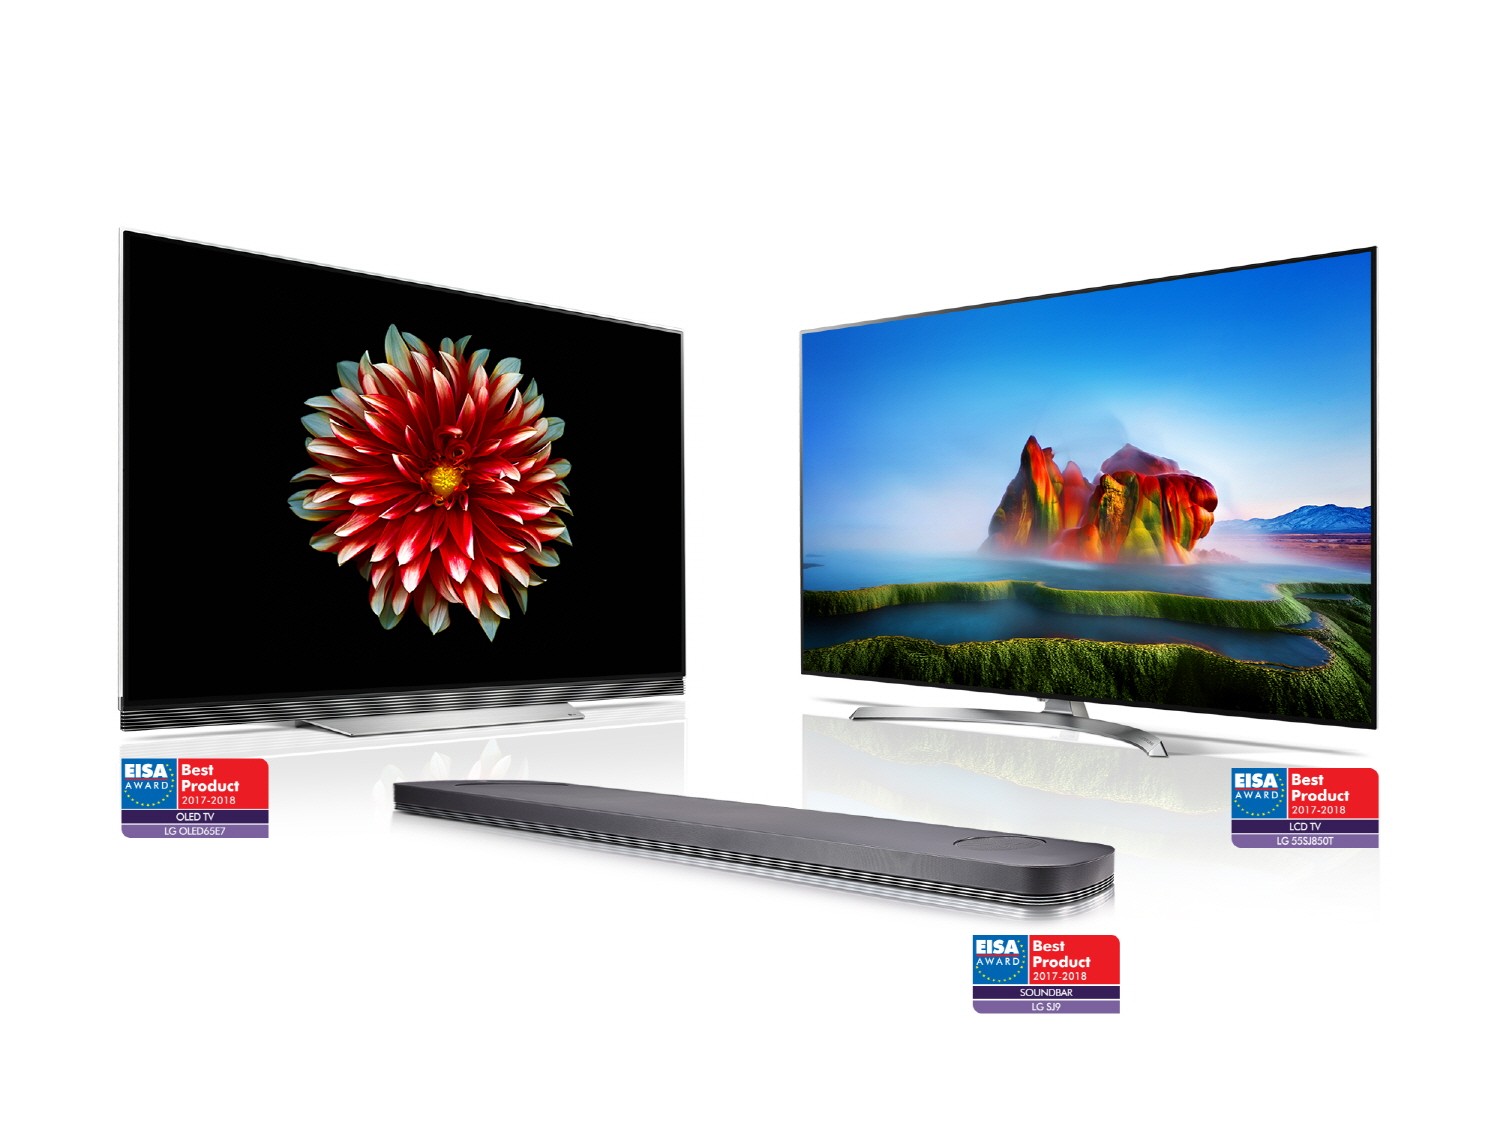 LG OLED TV AGAIN TAKES TOP AT EISA | LG NEWSROOM